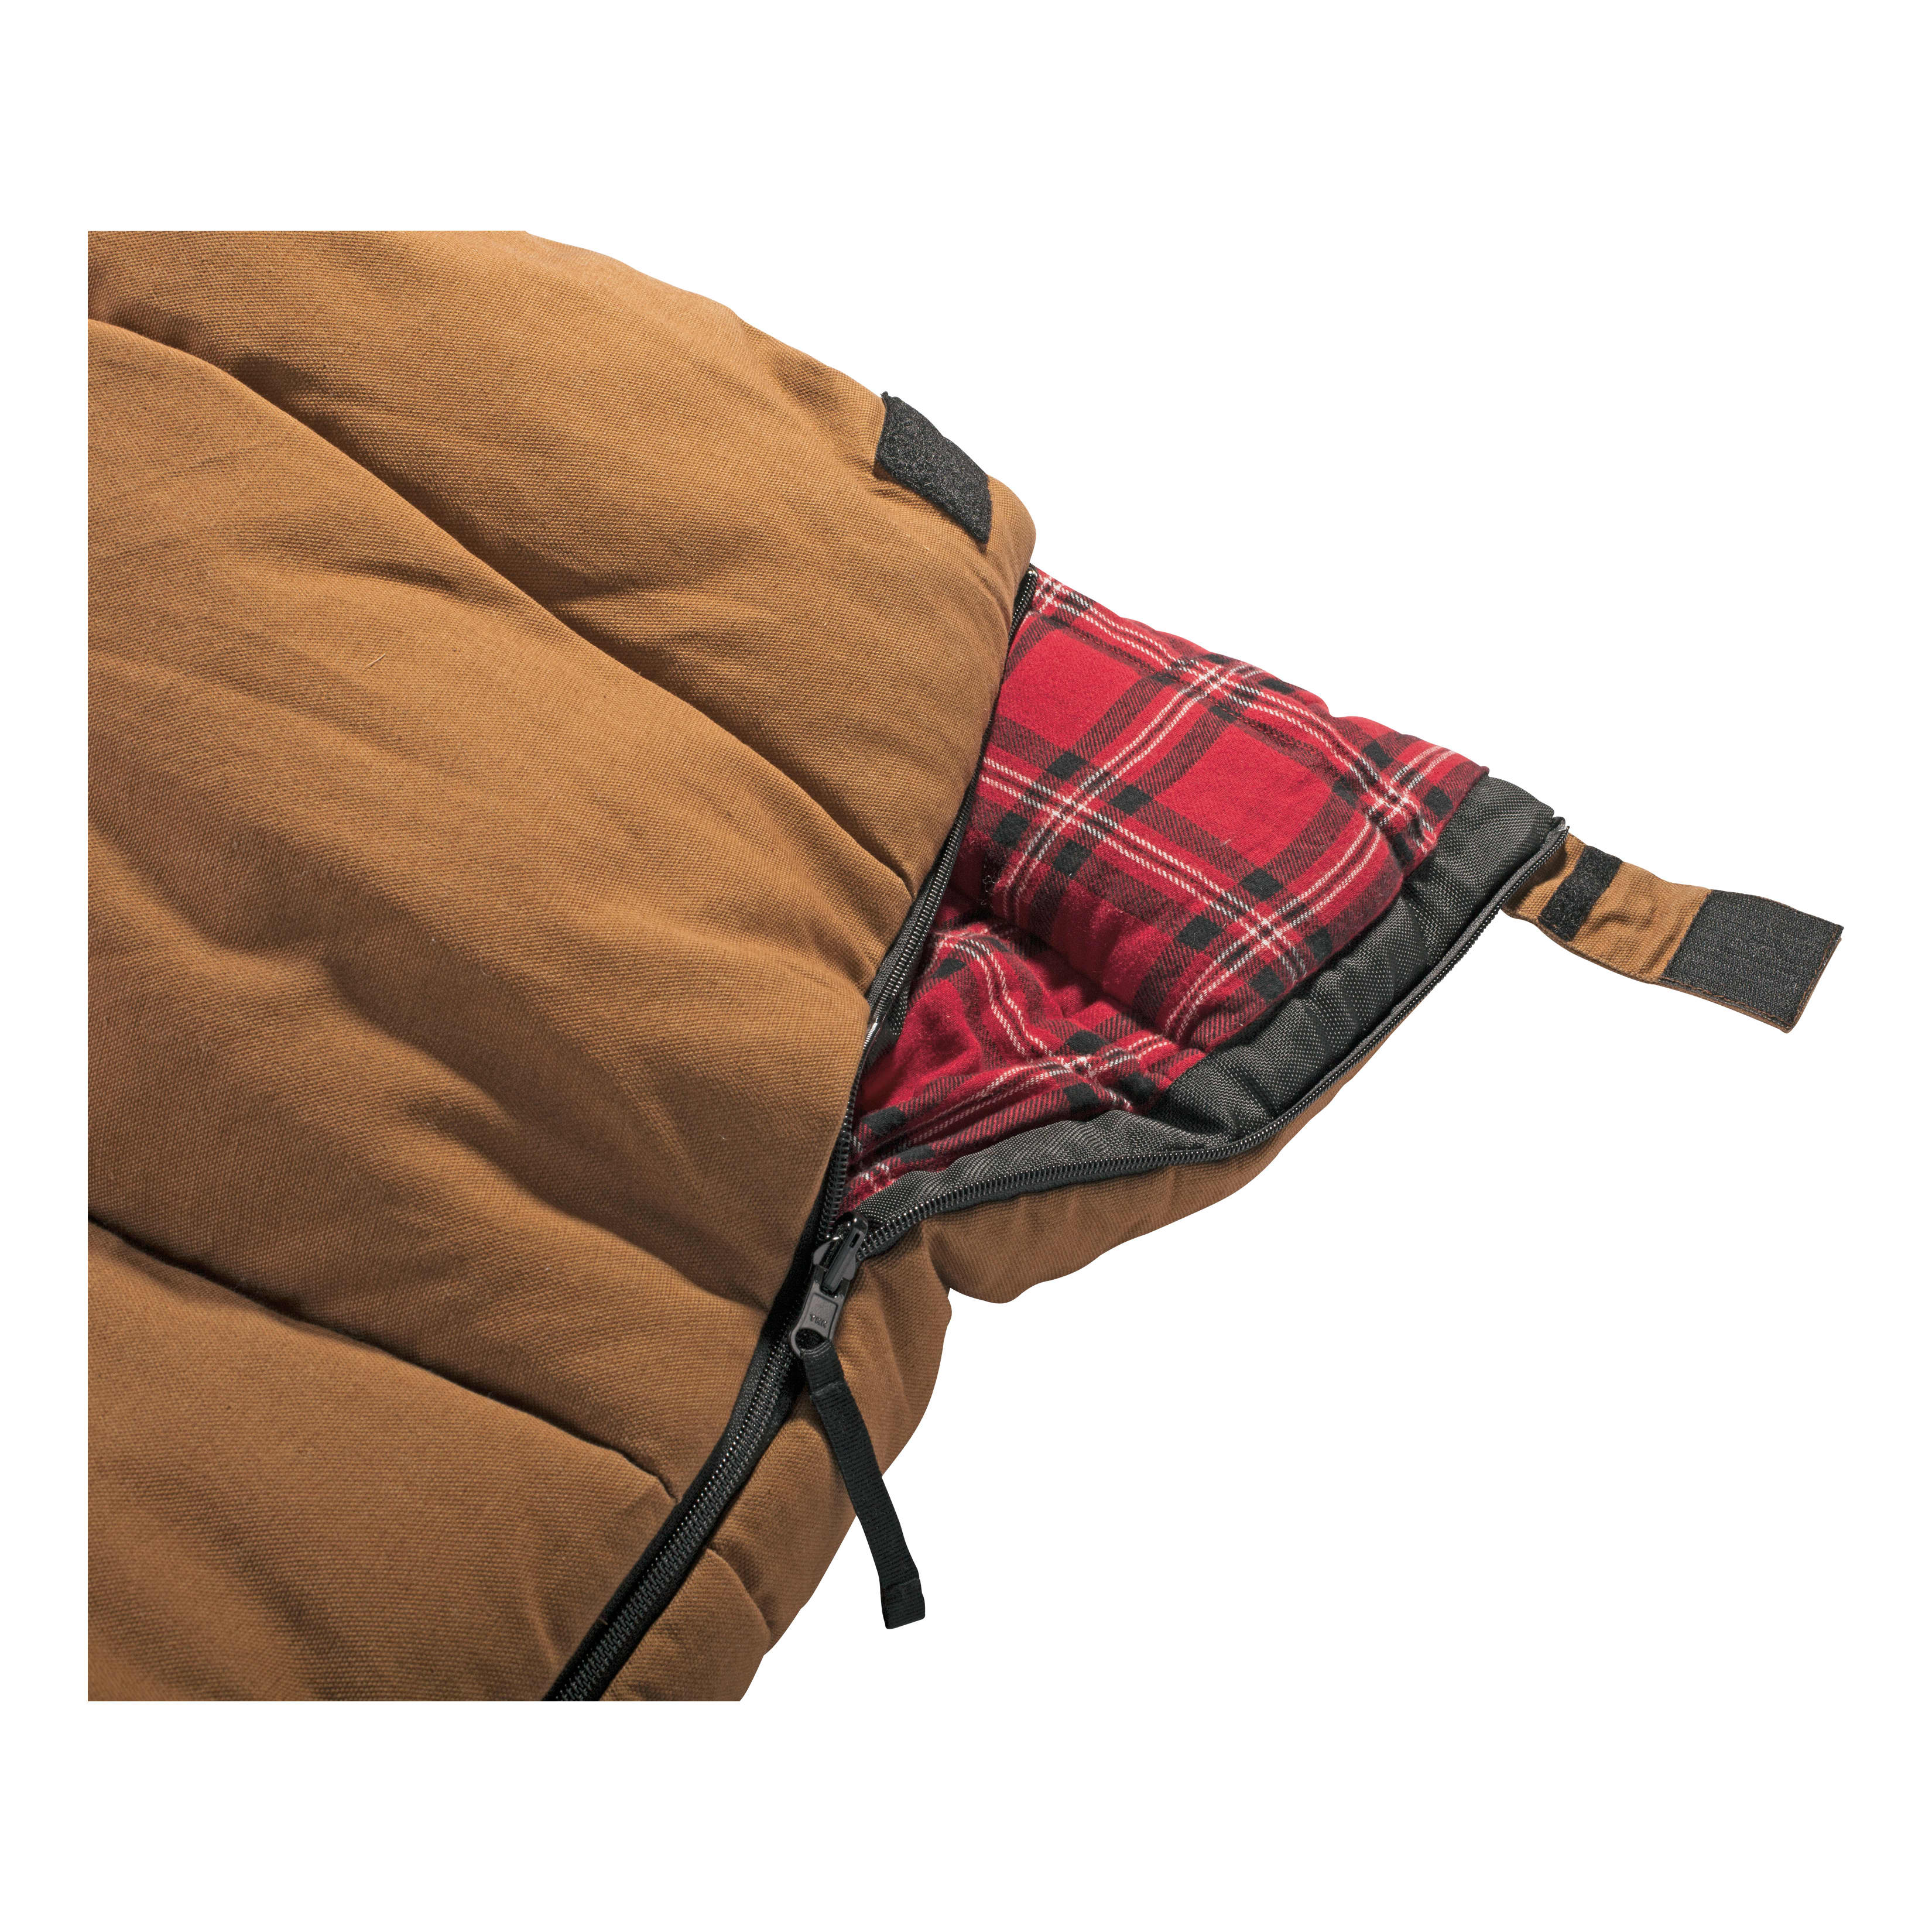 Cabela’s Mountain Trapper Sleeping Bags - Lining/Zipper View